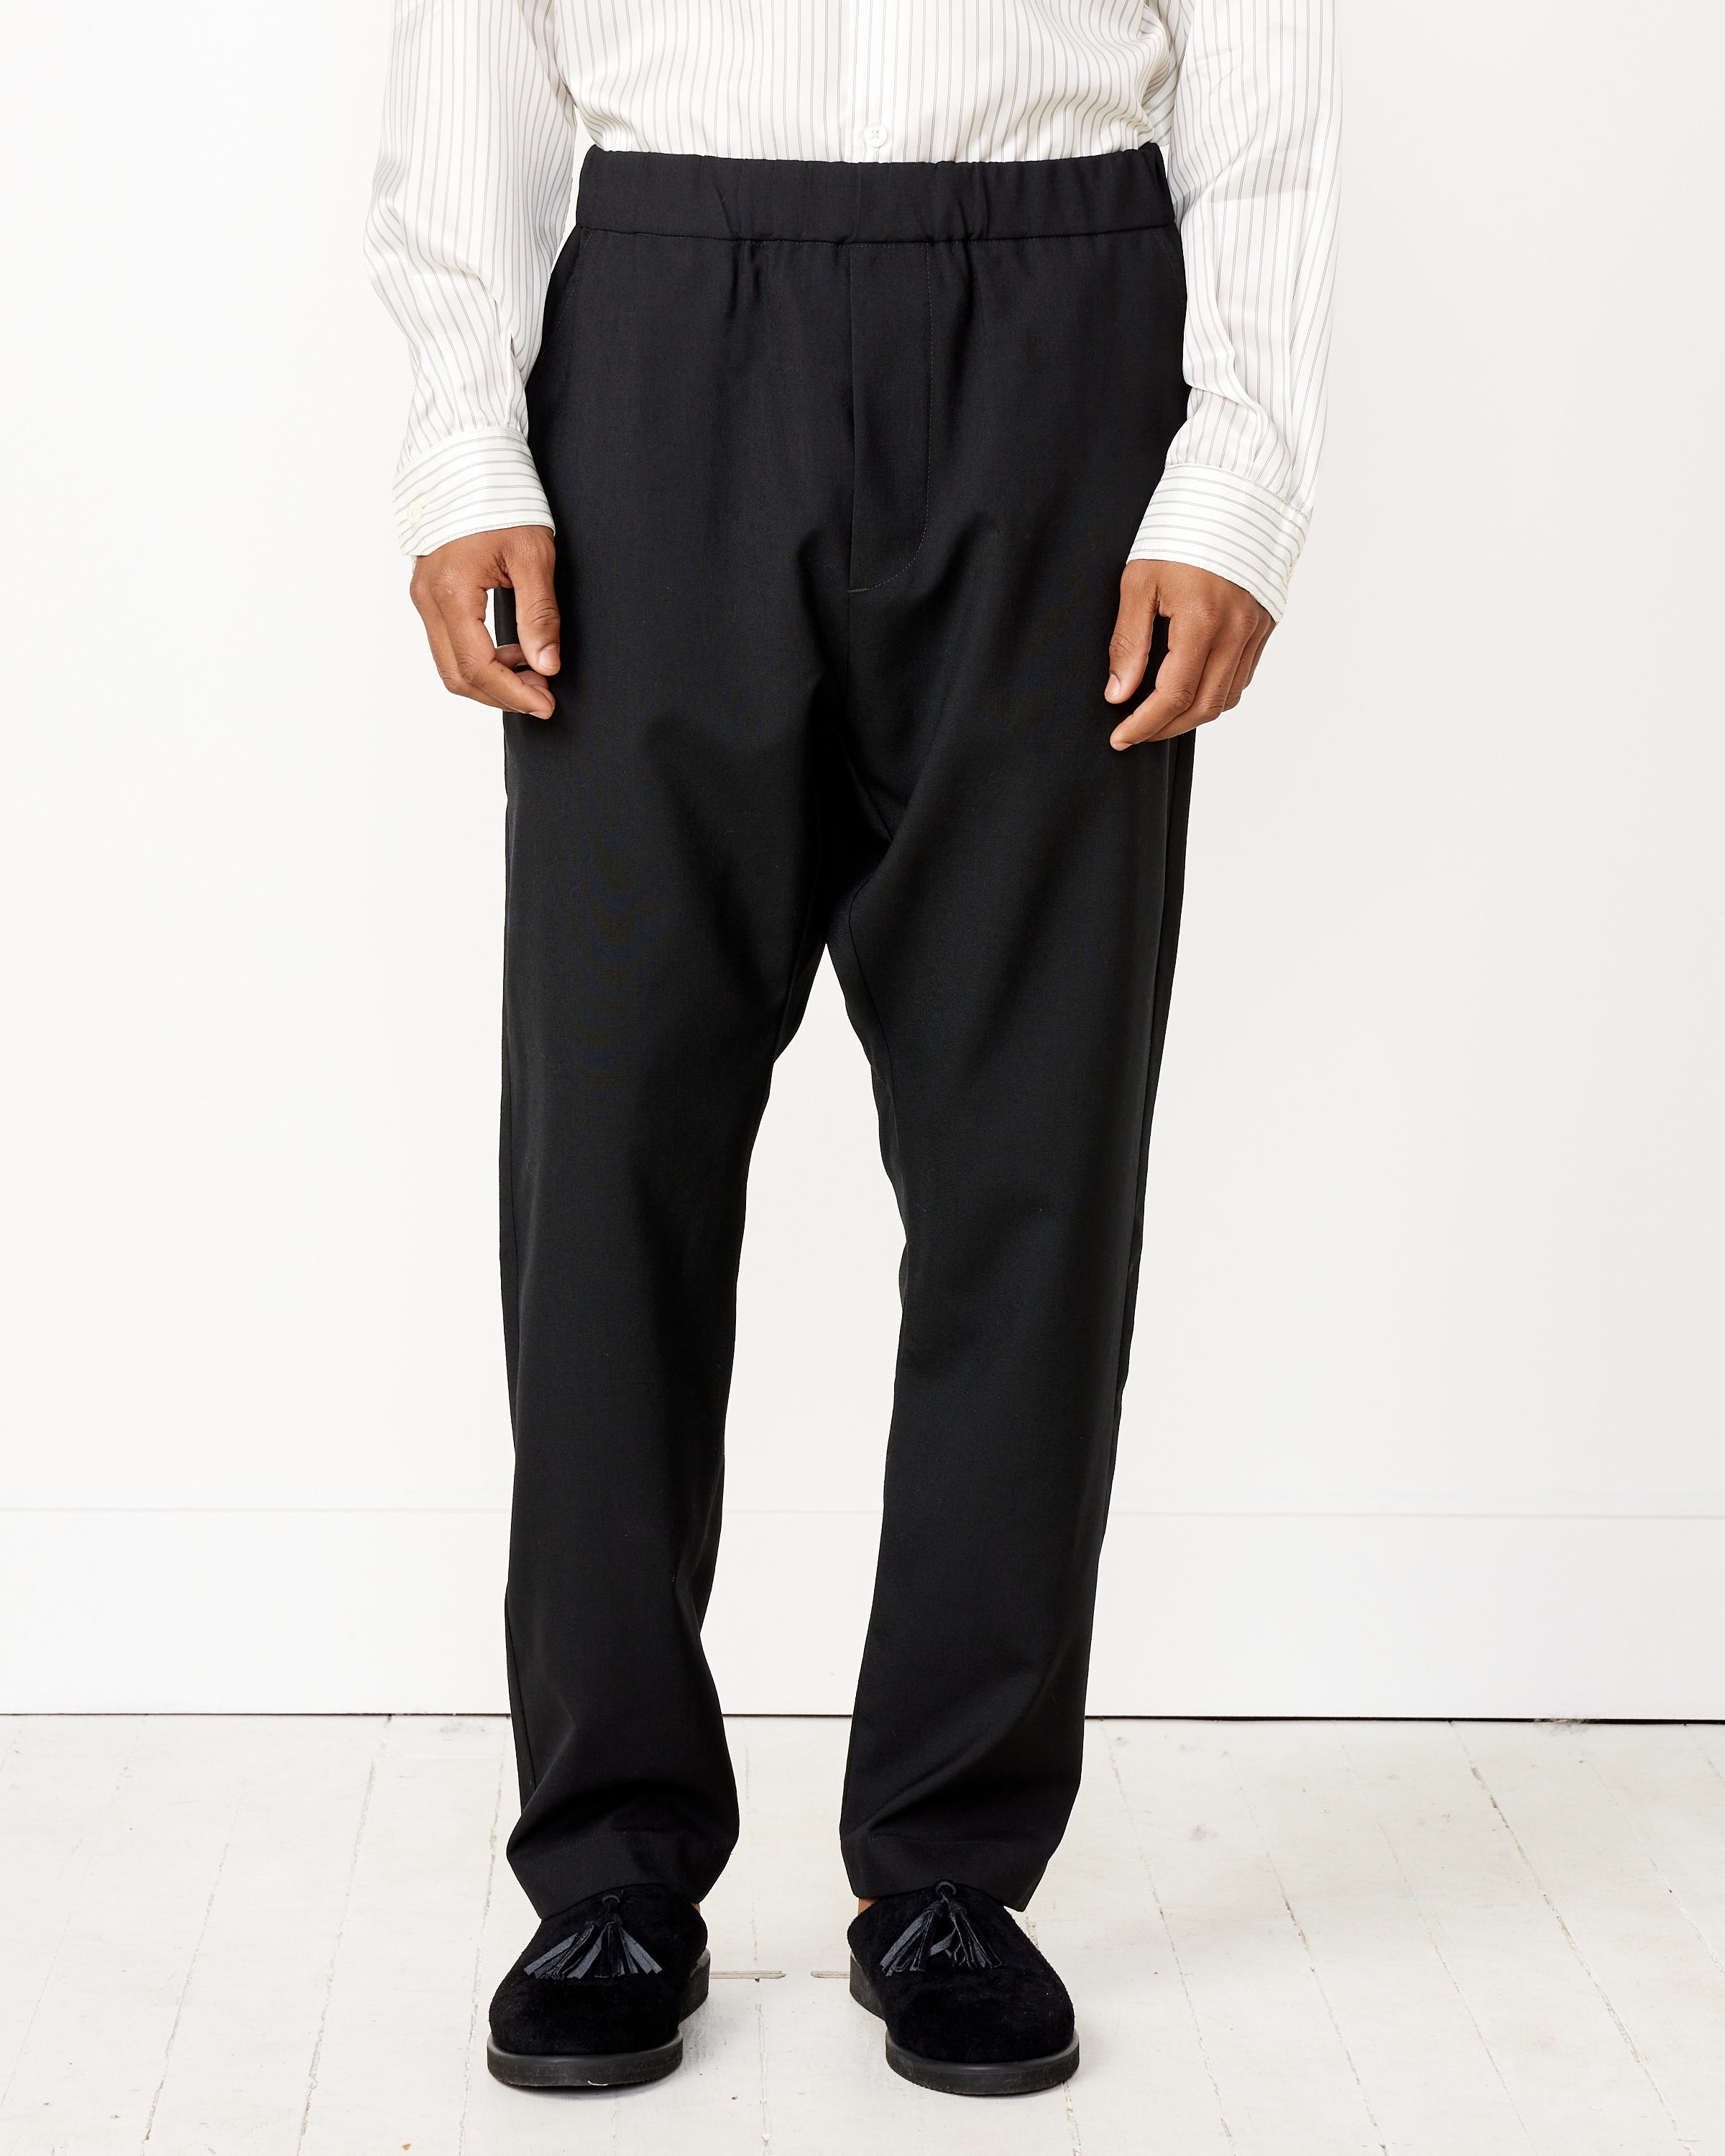 Yoyogi Pant in Black Tropical Wool